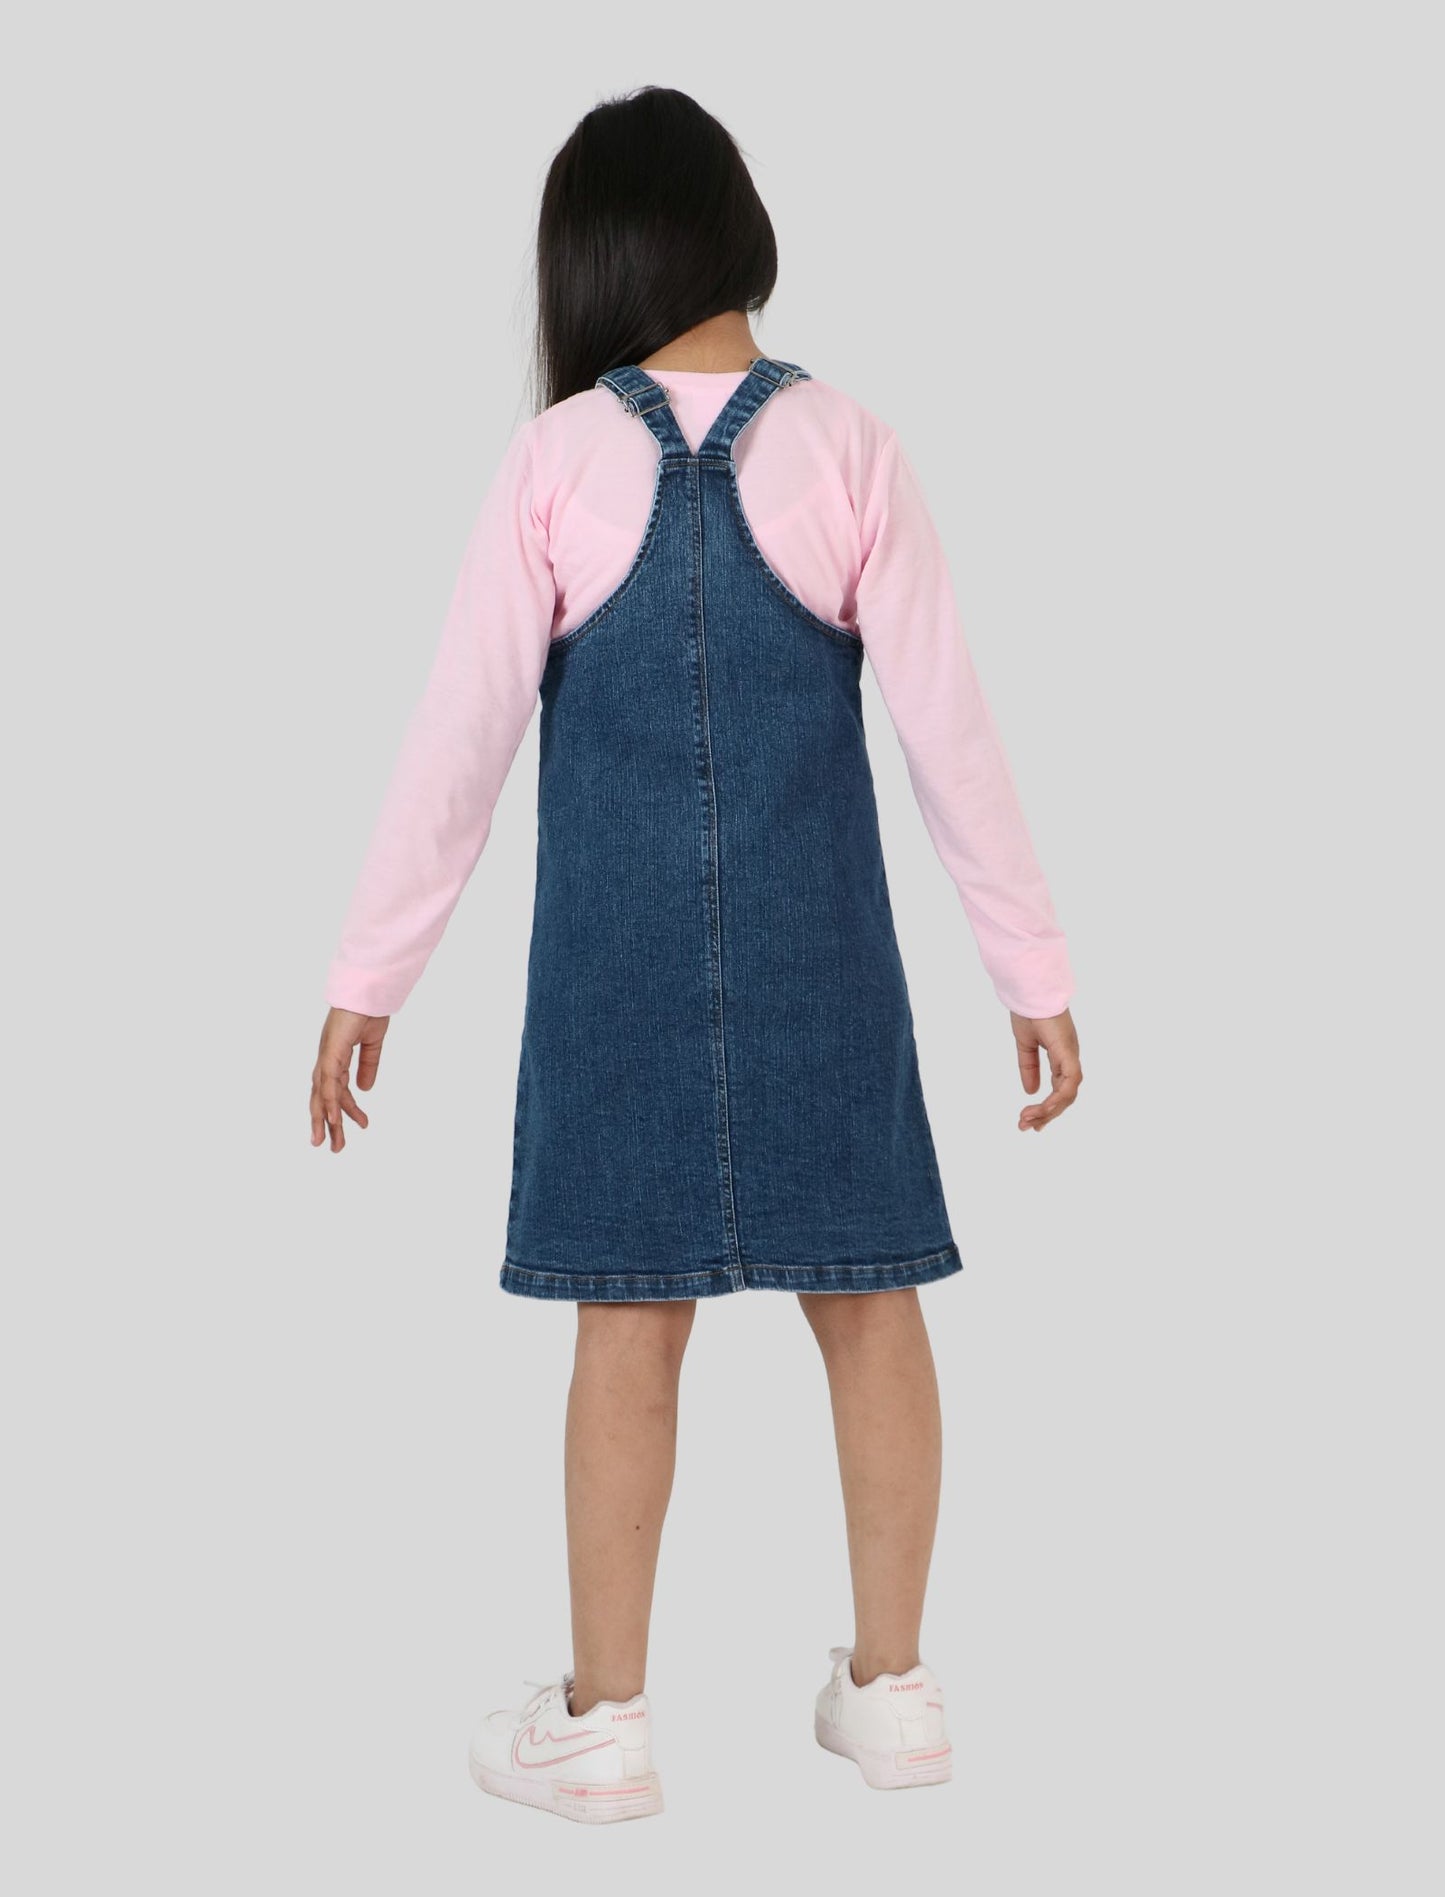 Girls Kids Denim Pinafore Dress (Blue)